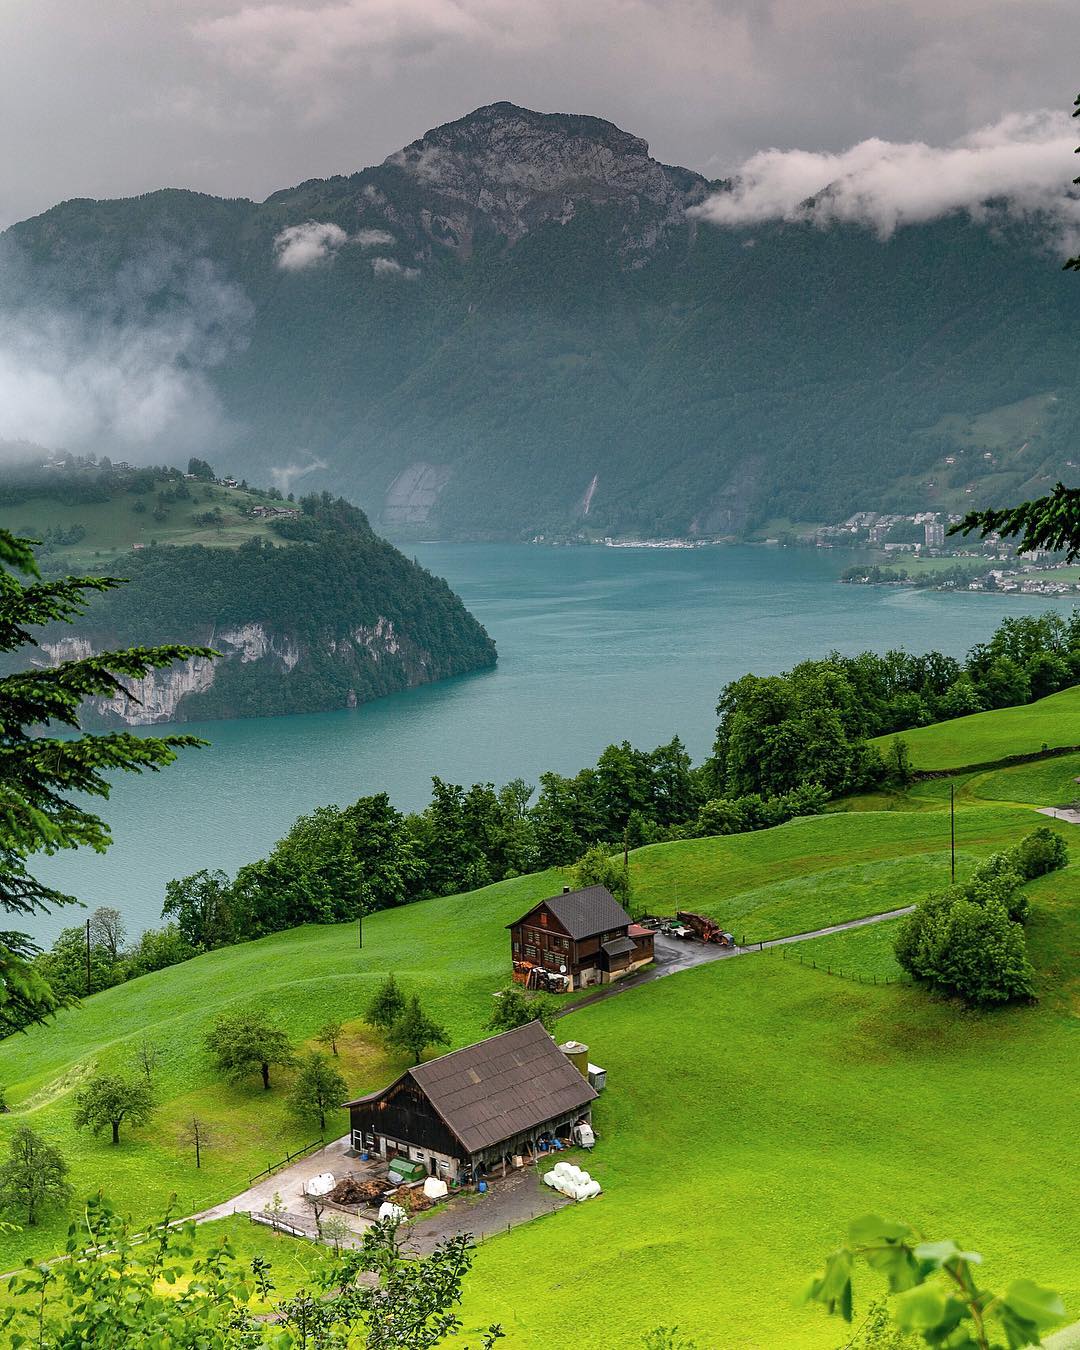 Beautiful place. Ури Швейцария. Долина Ури Швейцария. Пейзажи Швейцарии Сенаи Сенна. Switzerland, природа, пейзажи, Швейц.